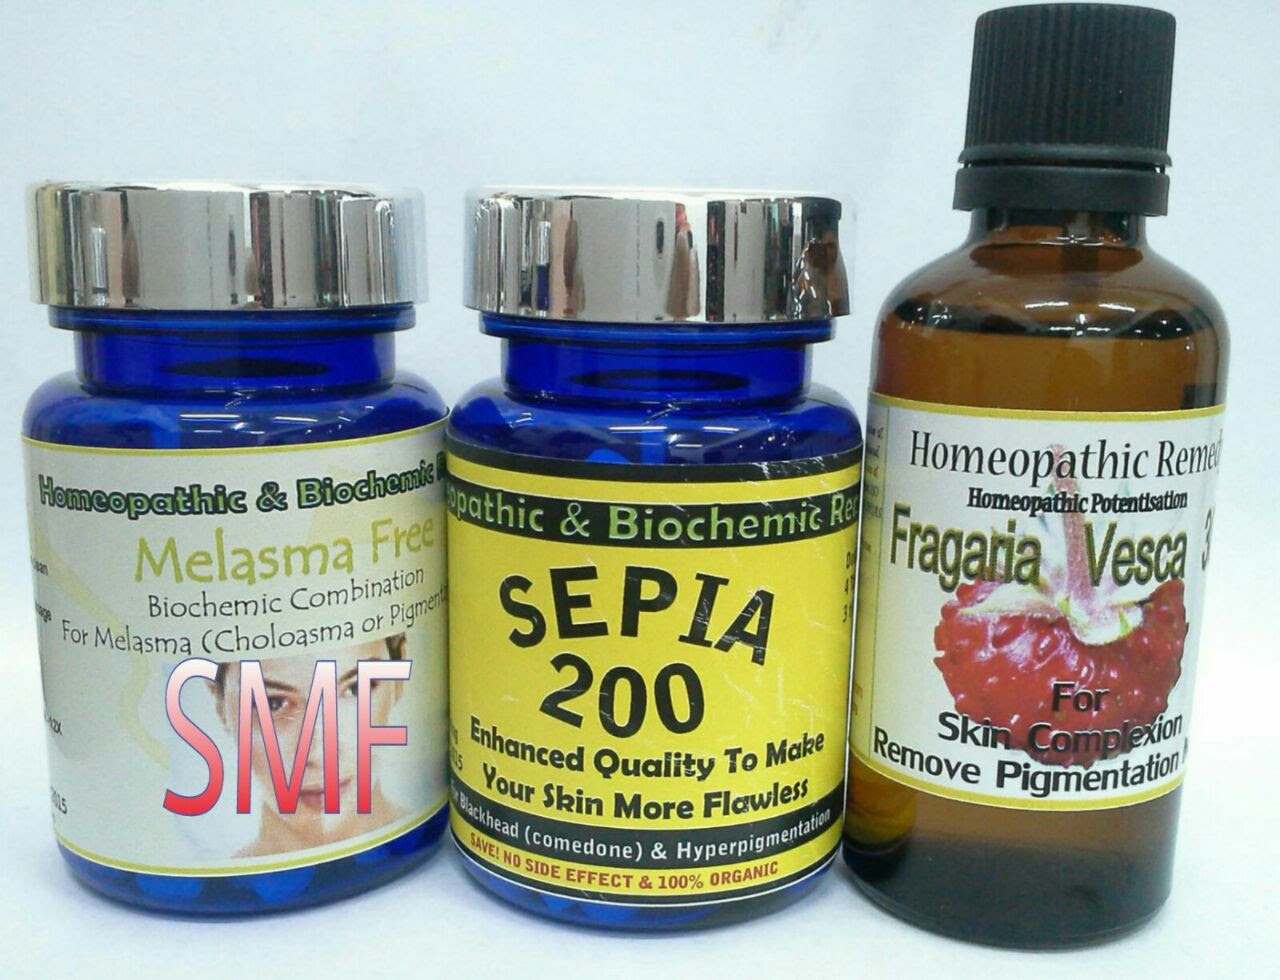 Ubat Perancang Homeopathy - Pertanyaan n